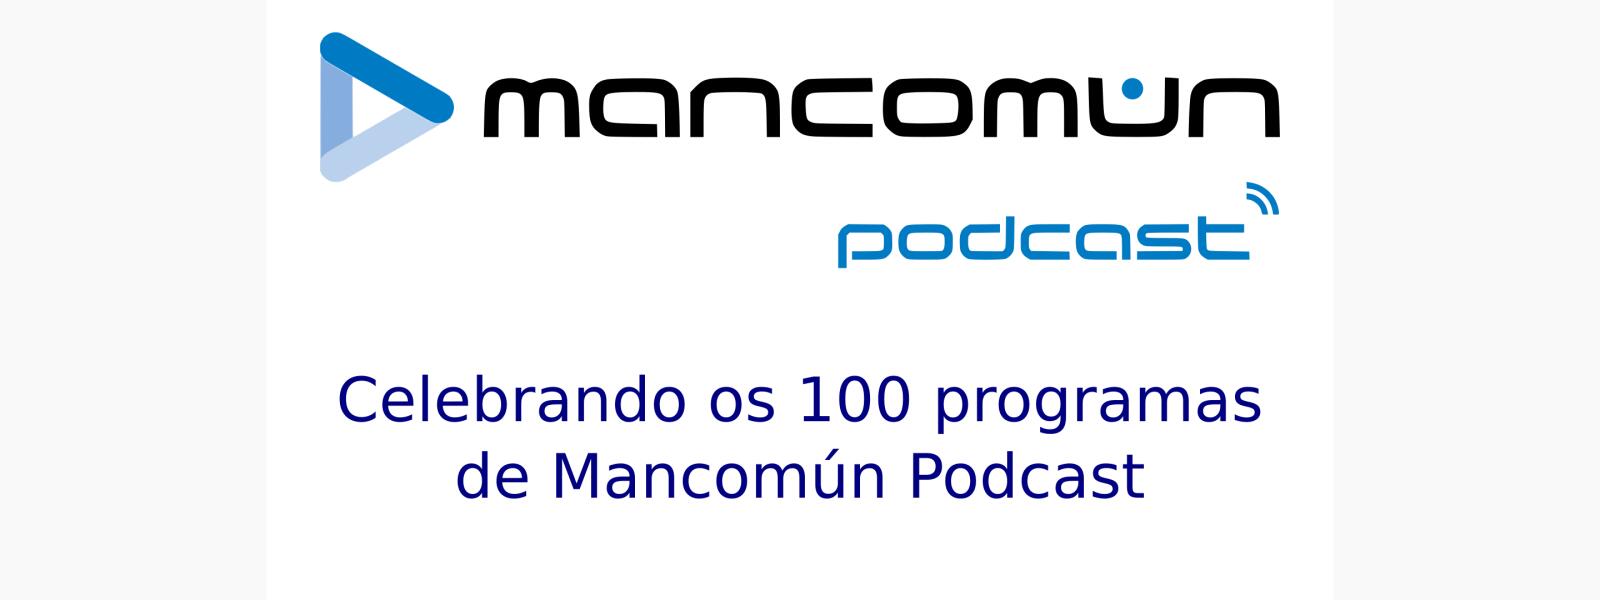 Mancomún Podcast: Especial Mancomún Podcast, programa 100